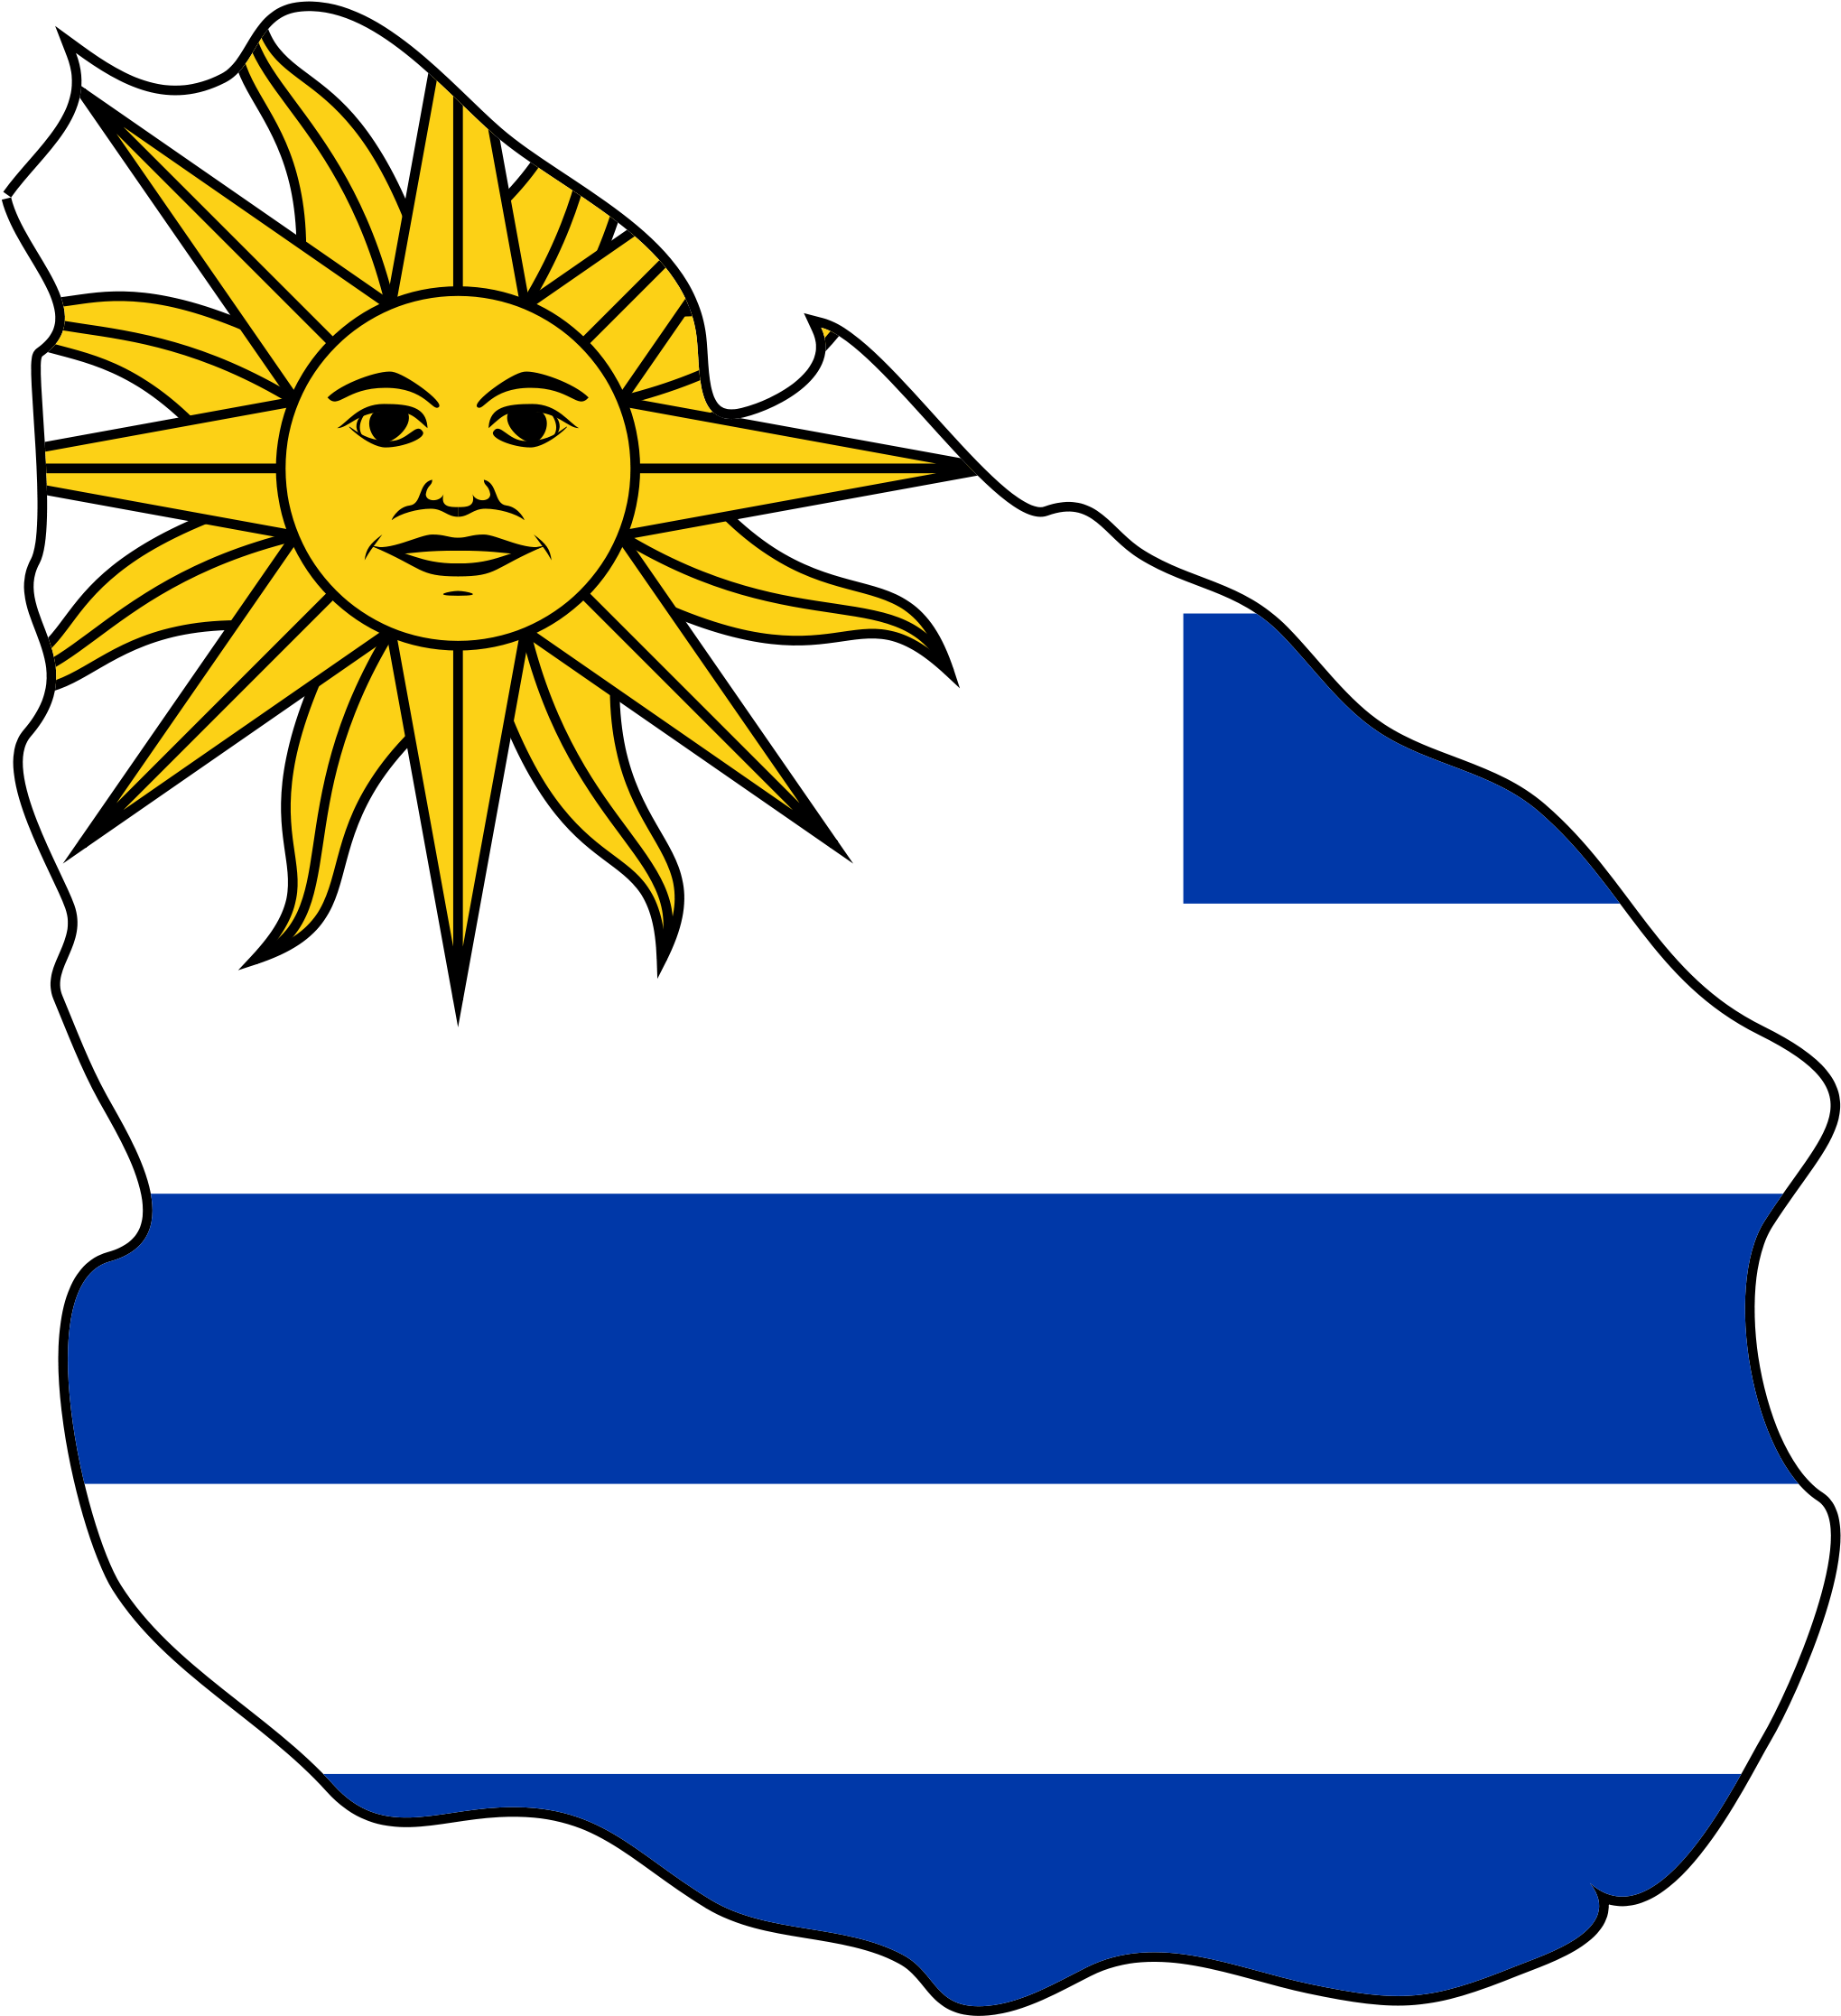 Uruguay Flag PNG